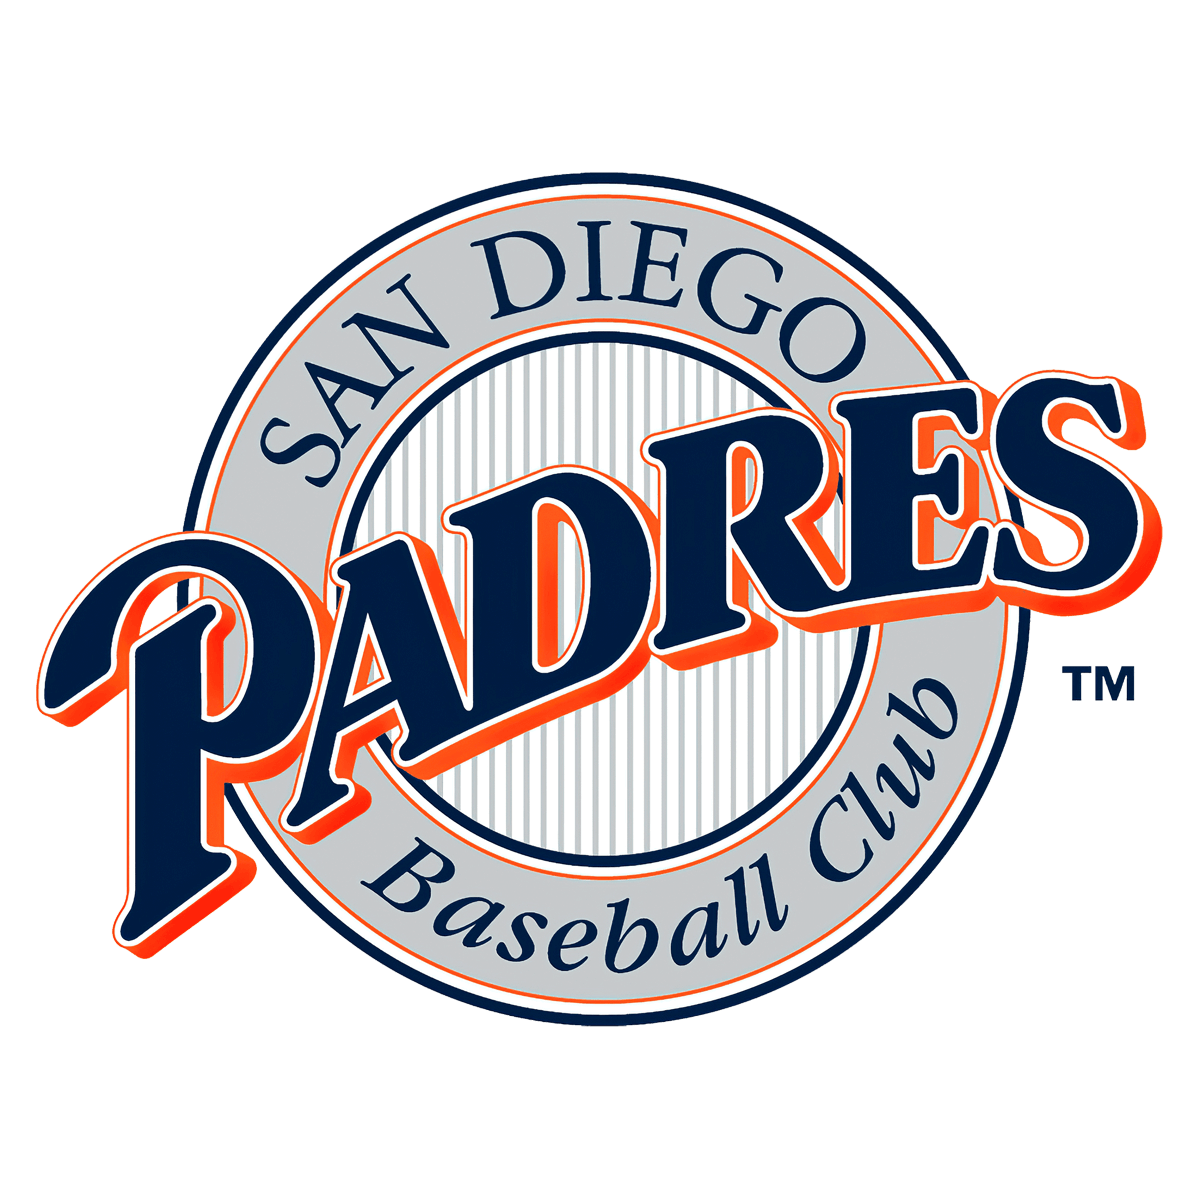 San Diego Padres logo 1991